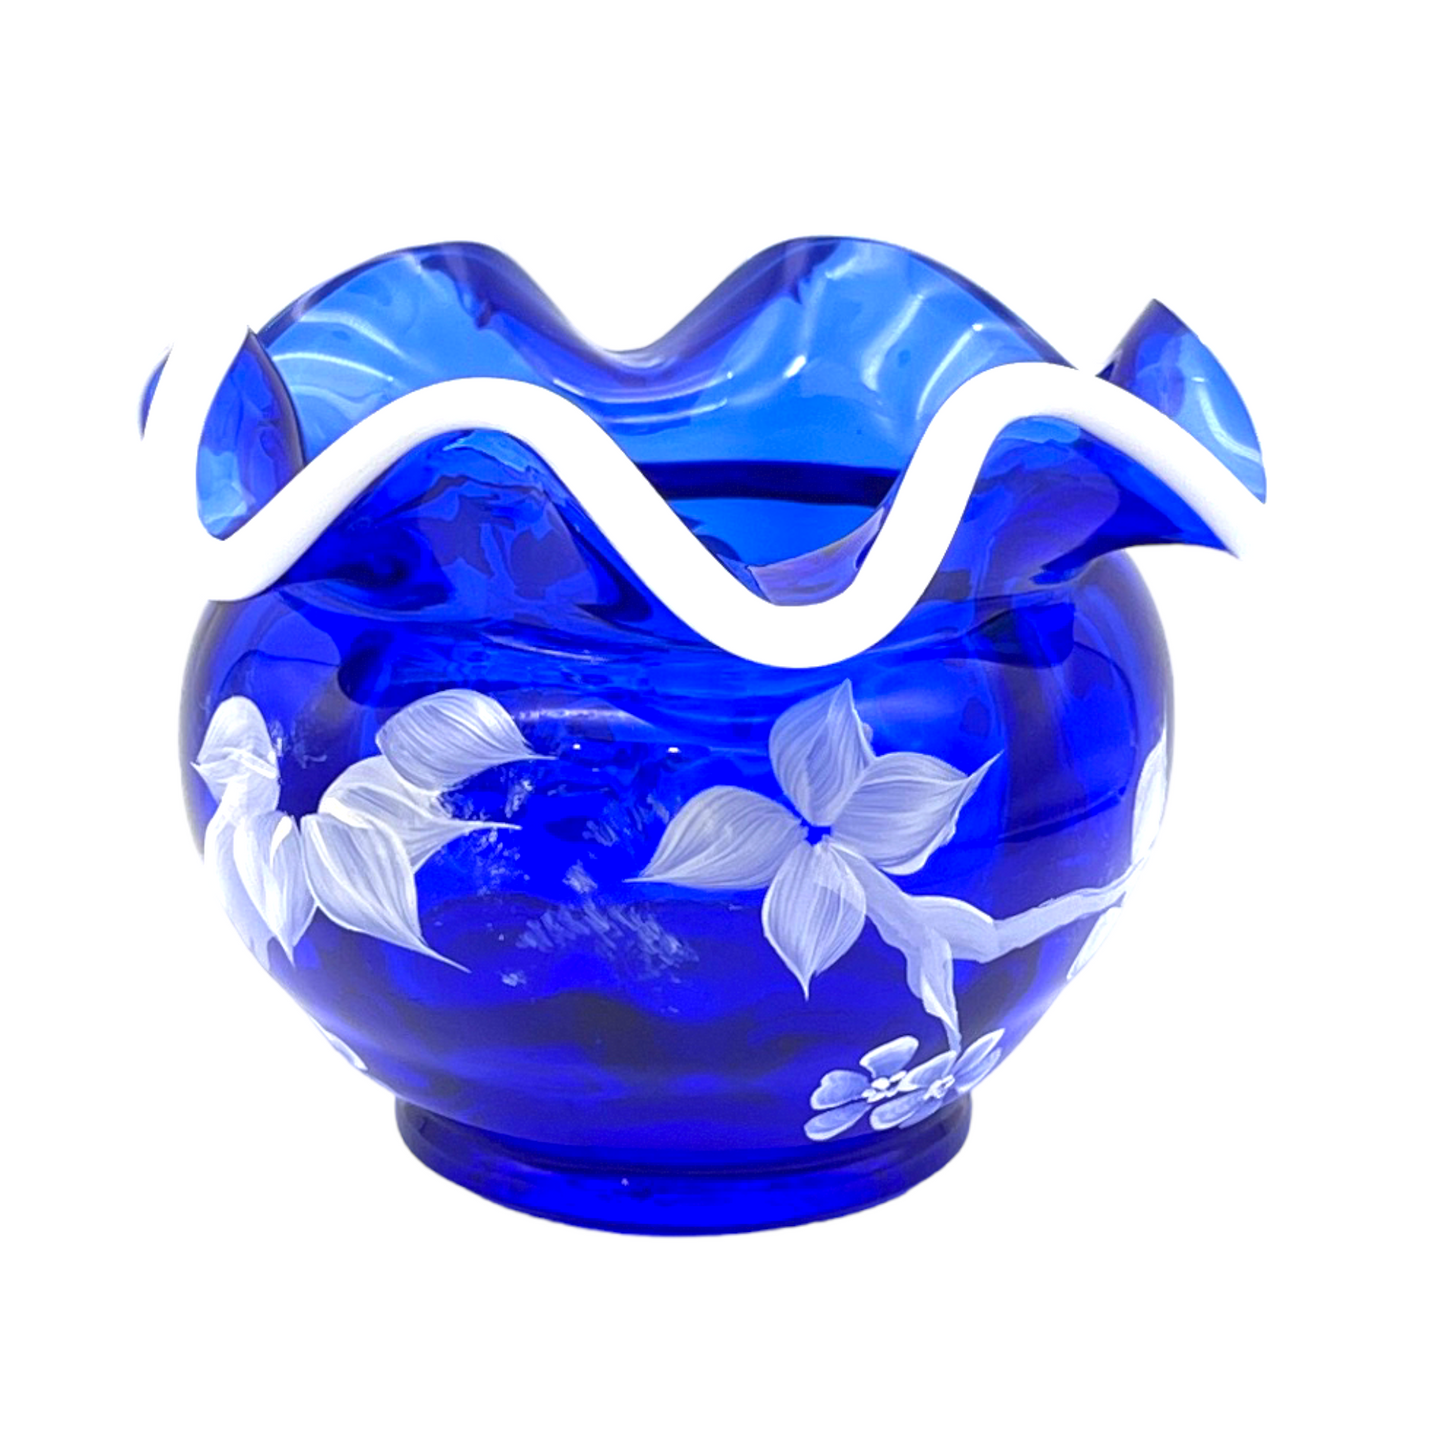 Fenton Art Glass - Nancy Fenton Signed - Cobalt Blue & White Candy Bowl - Hand Painted - 3.5"